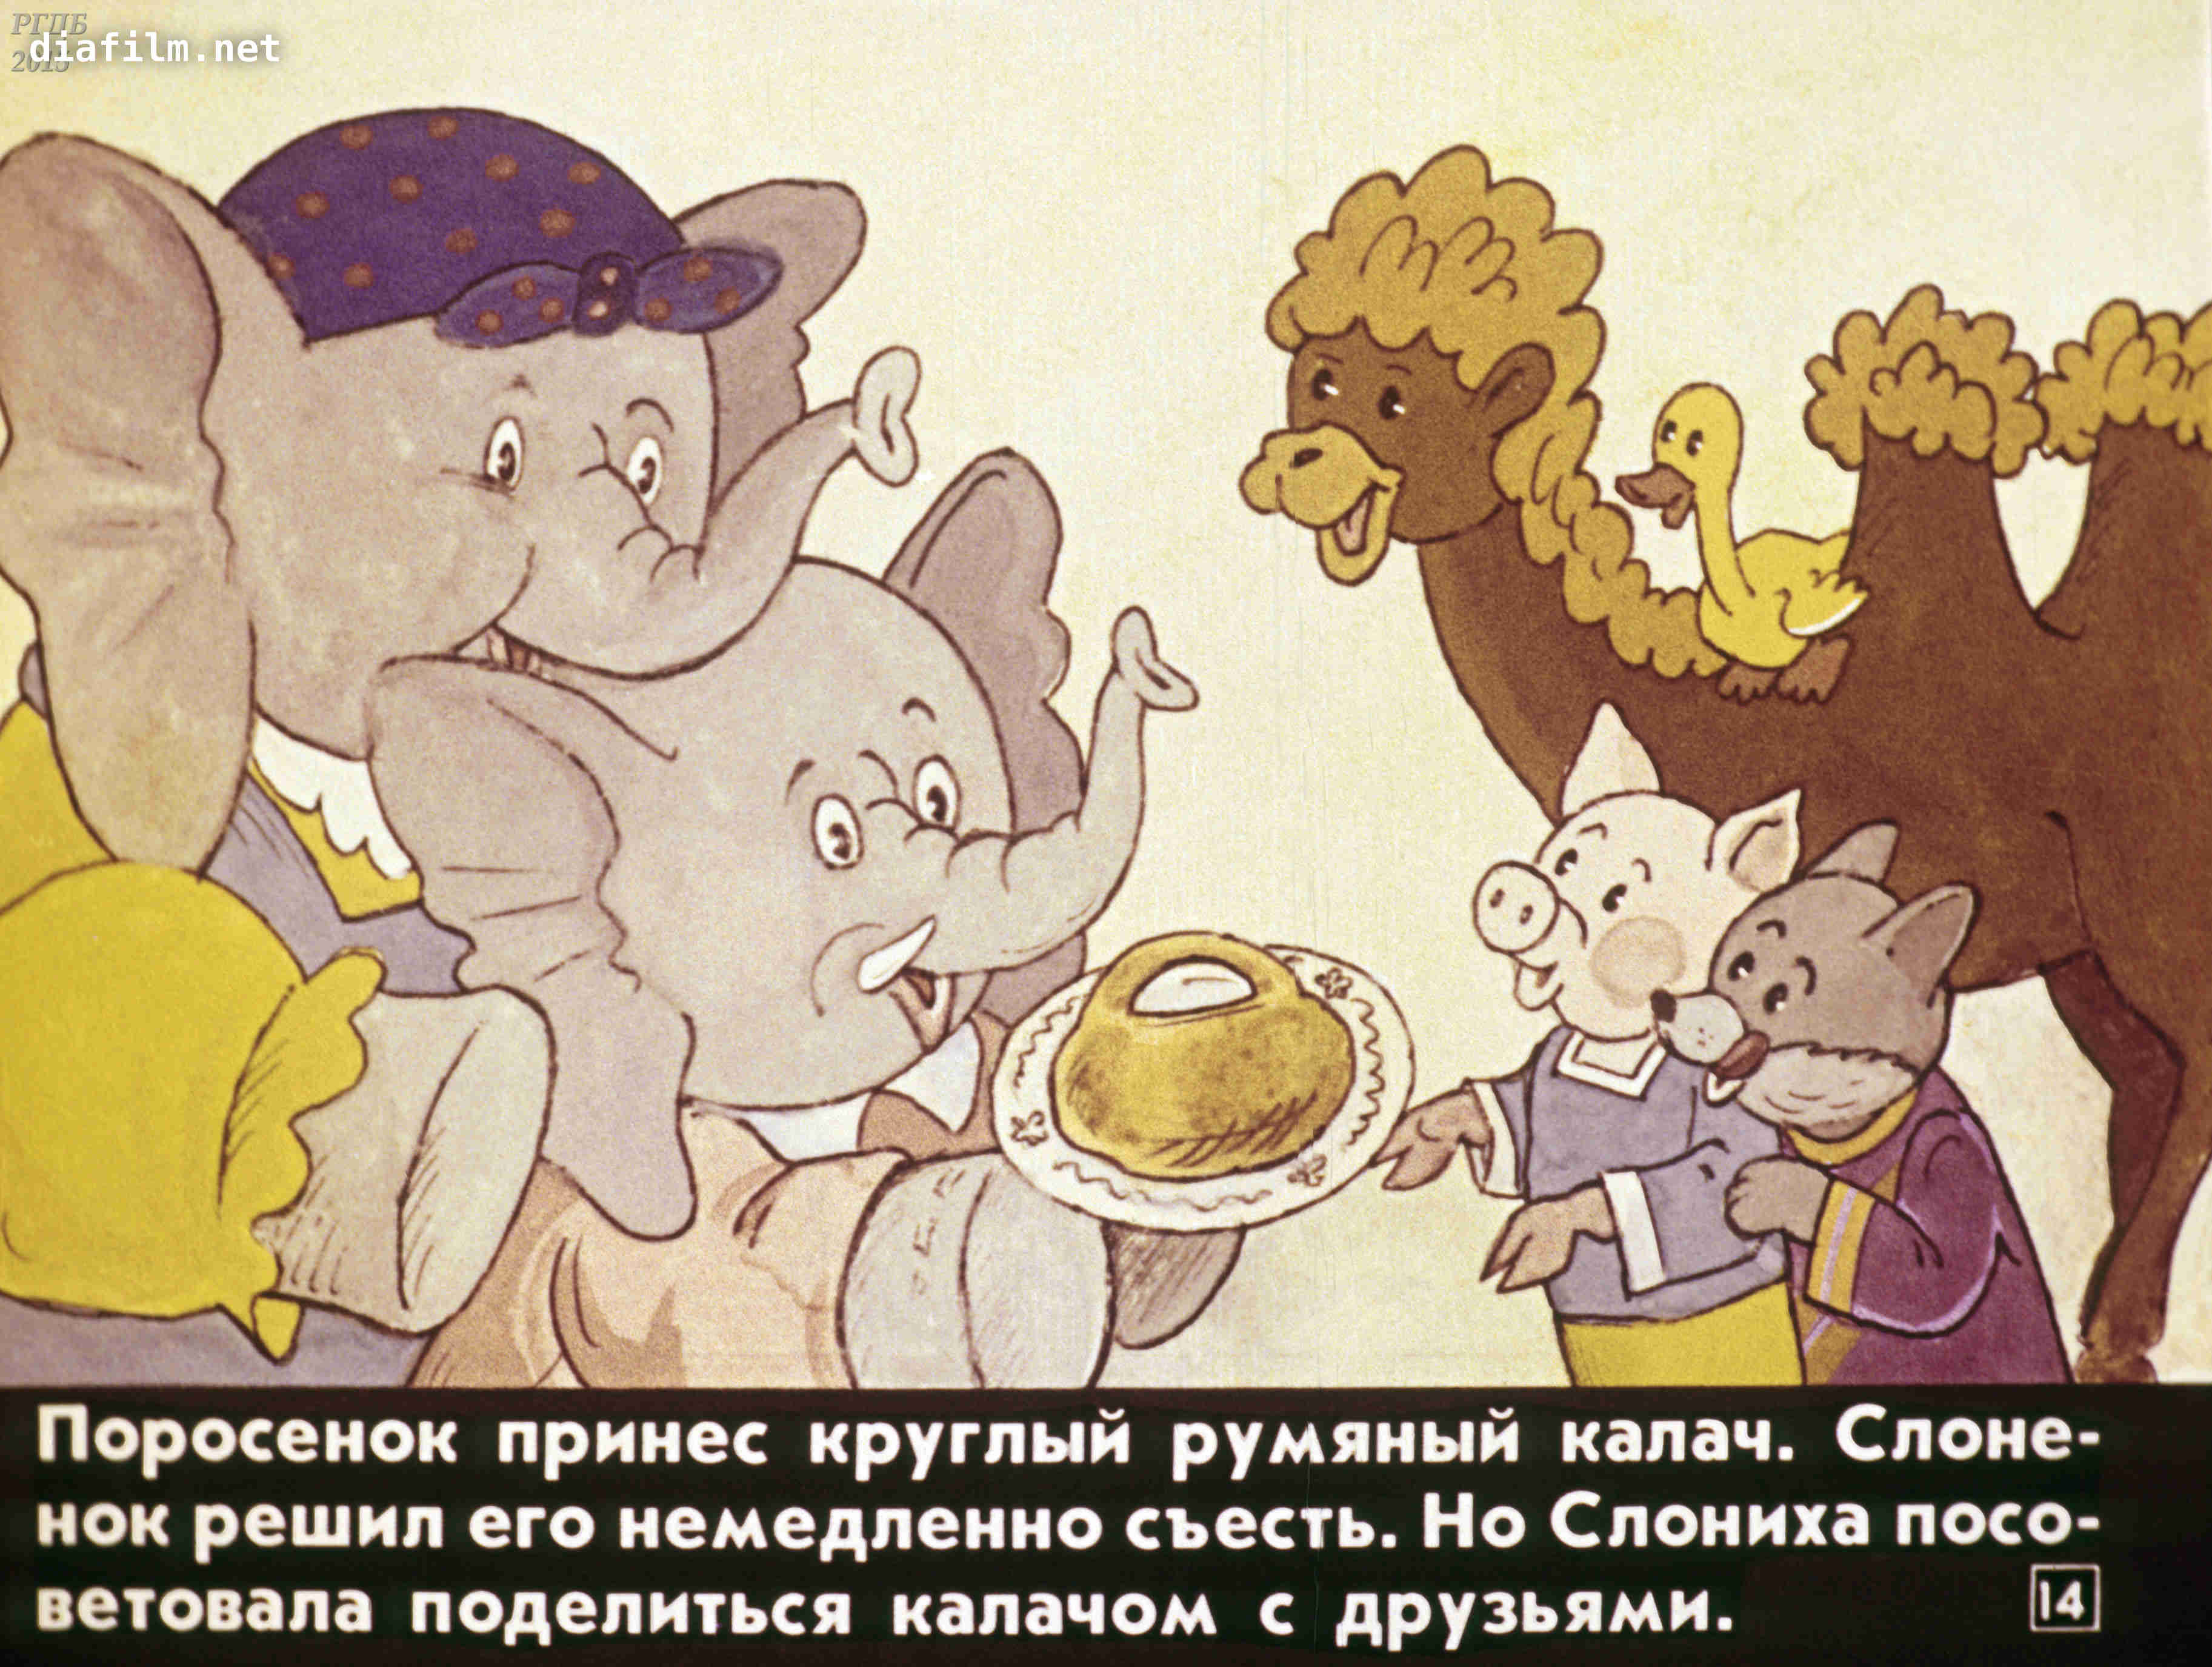 Есть мама у слоненка. У слоненка день рождения. У слоненка день рождения сказка. Самойлов у слоненка день рождения. У слоненка день рождения книга.